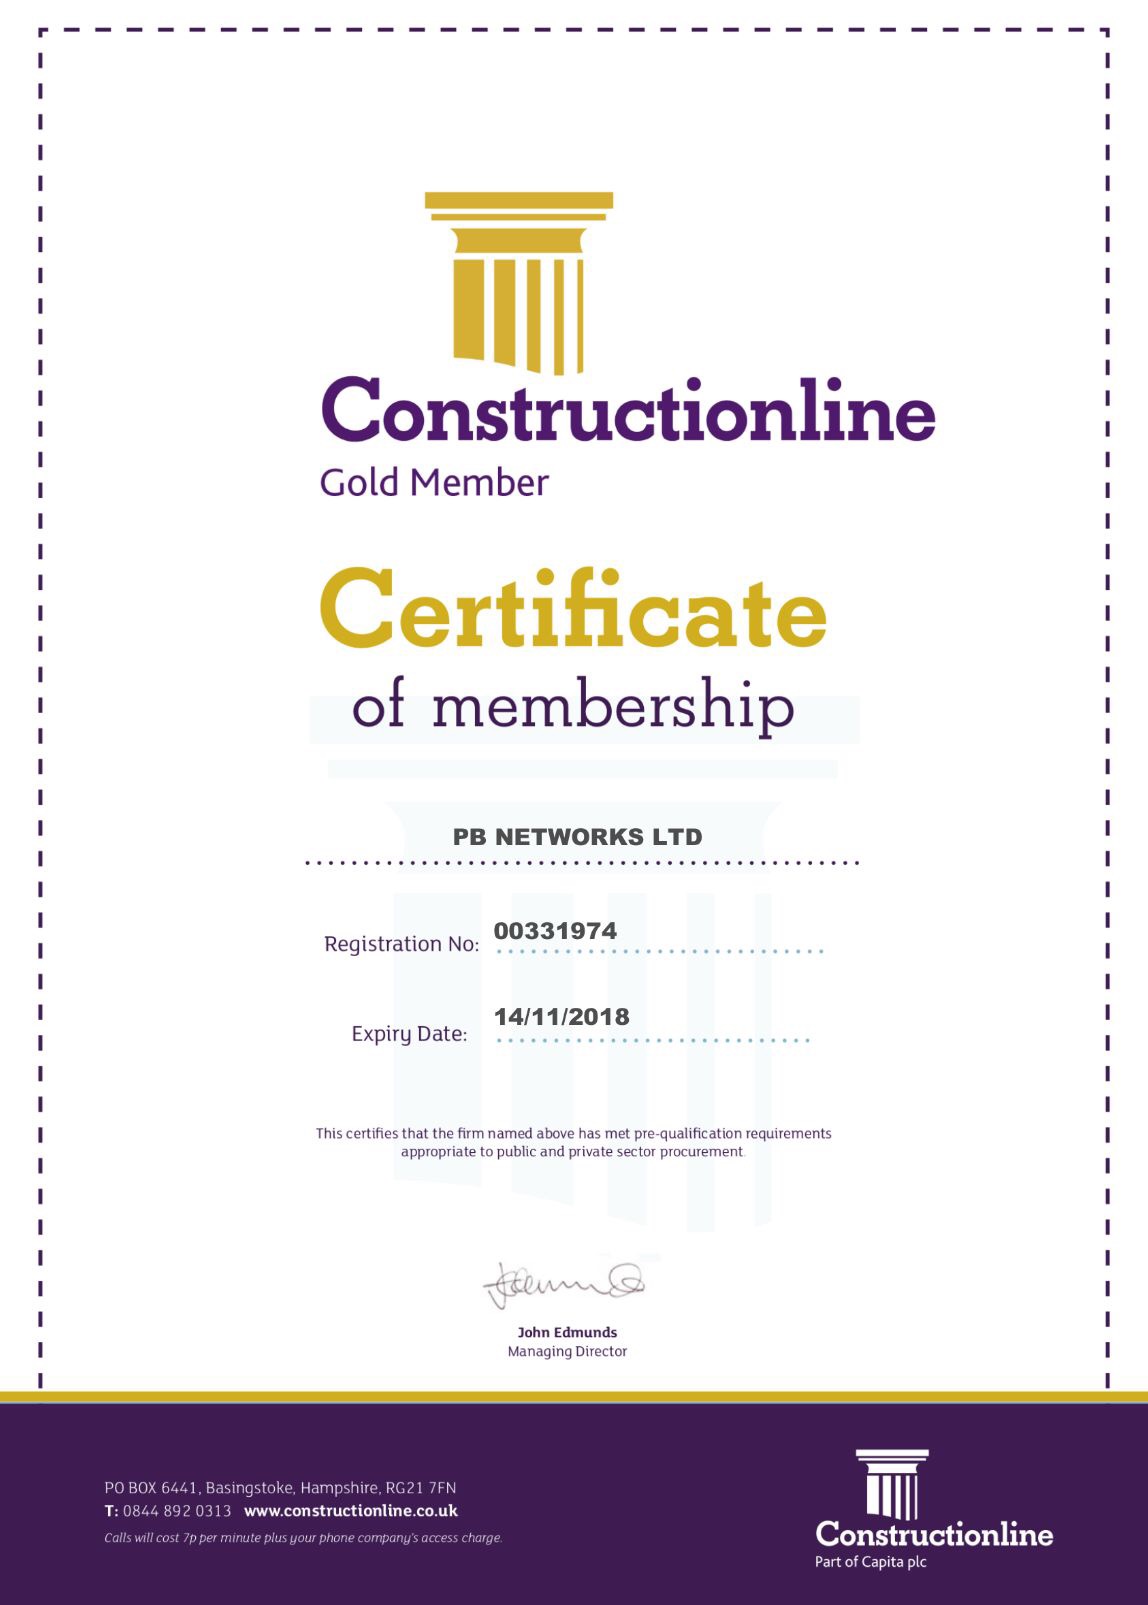 Constructionline accredited uk contractor